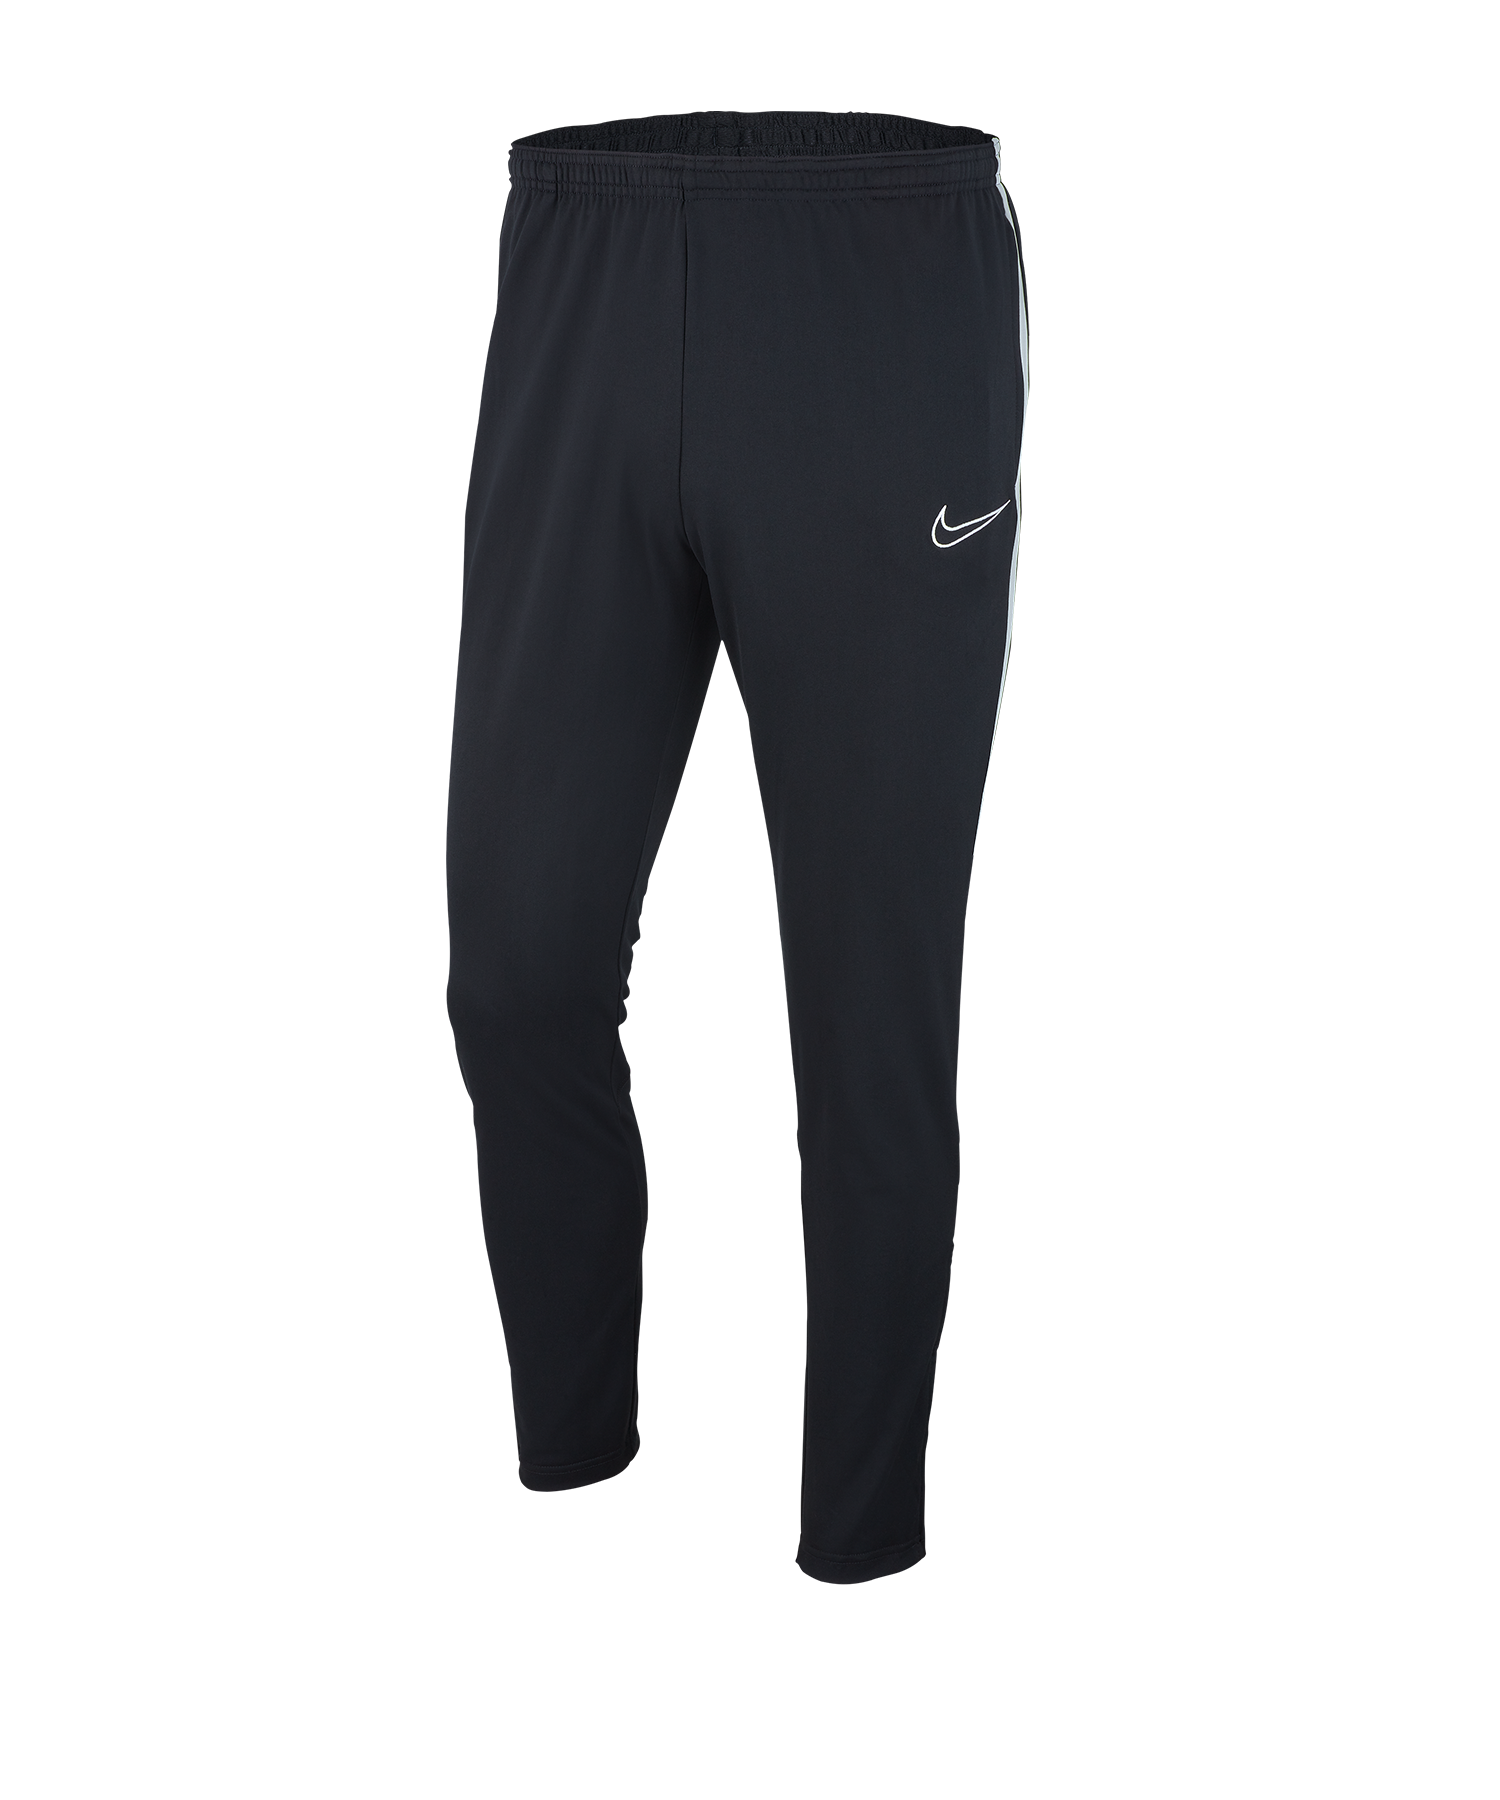 Nike Academy 19 Pants - Black